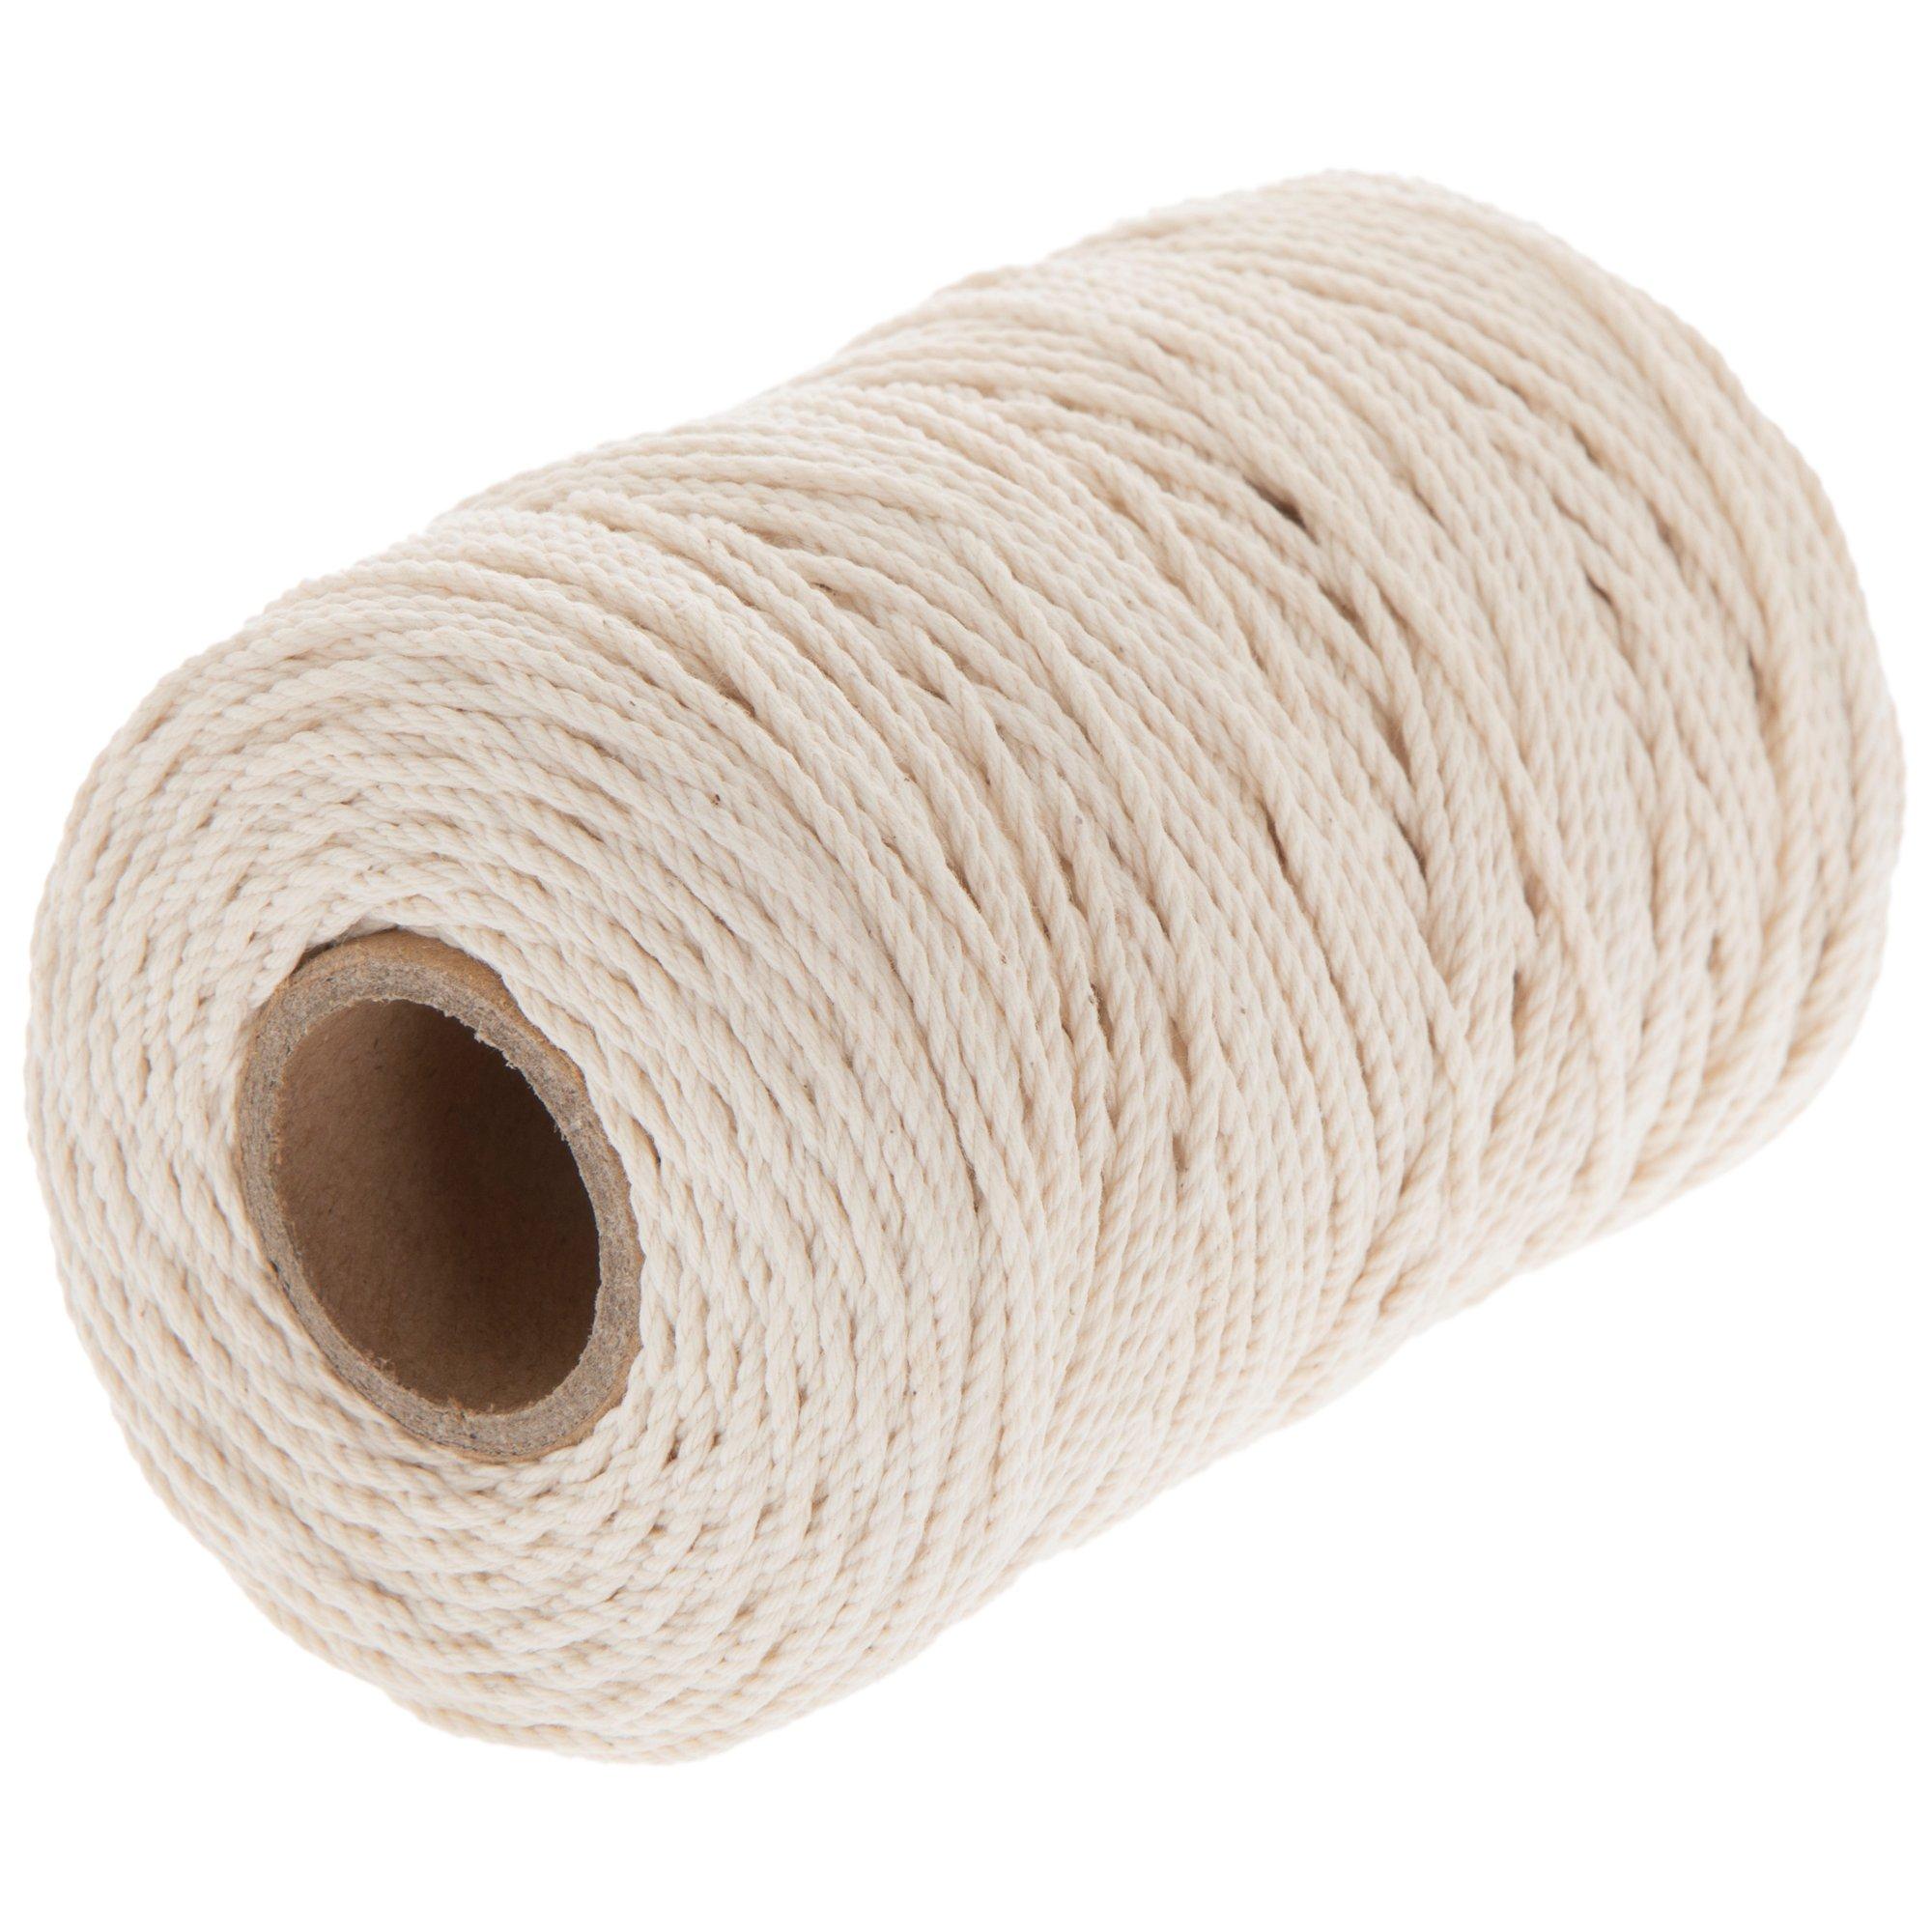 Natural Cotton Cord